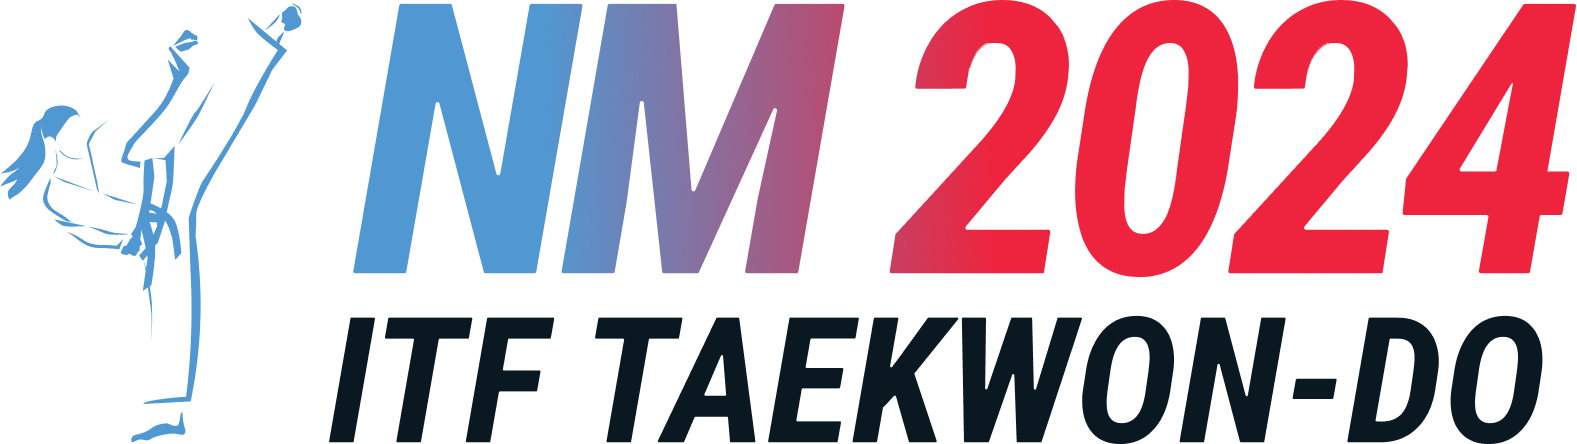 nm logo